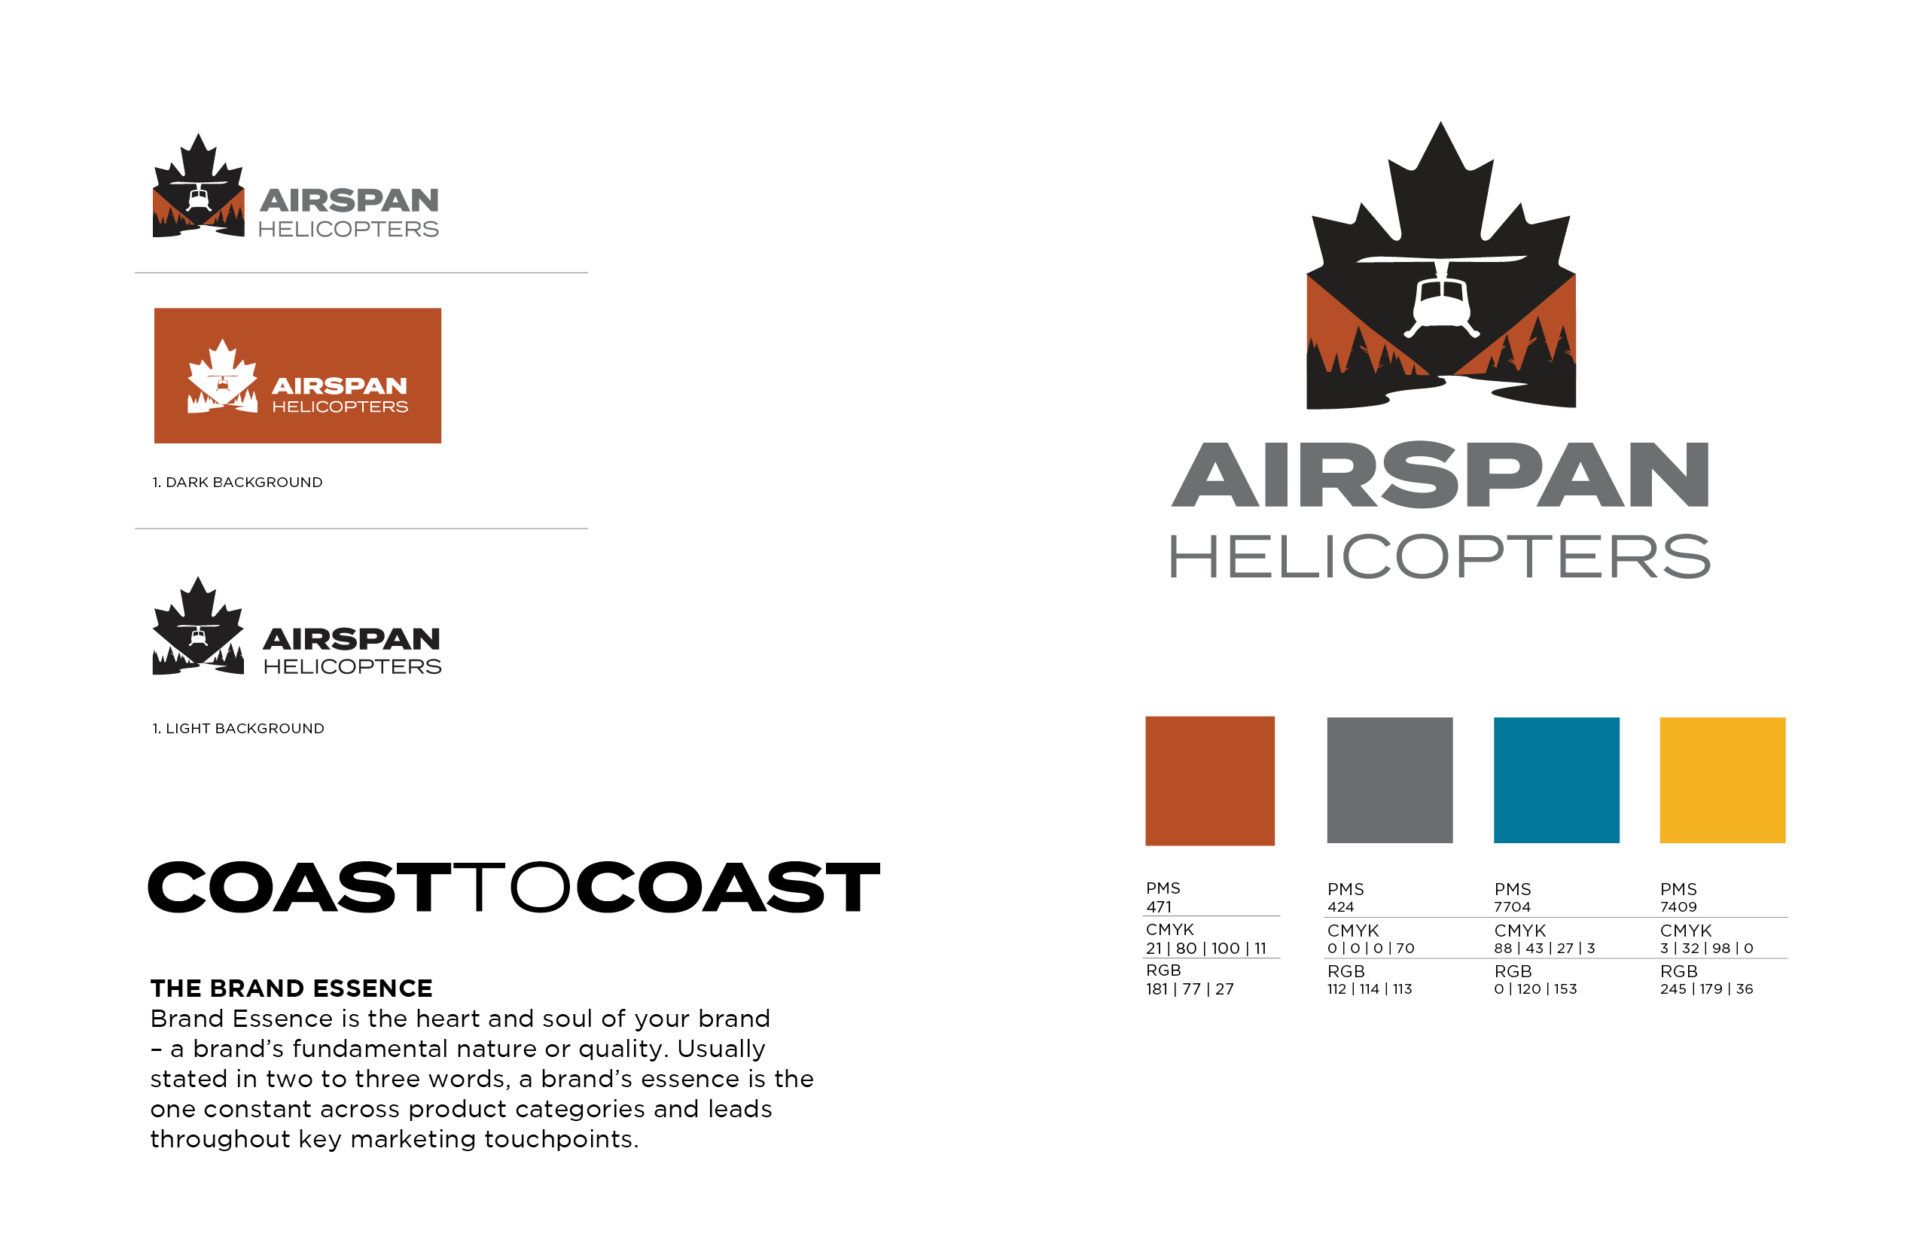 Airspan logo, colour palette and tagline